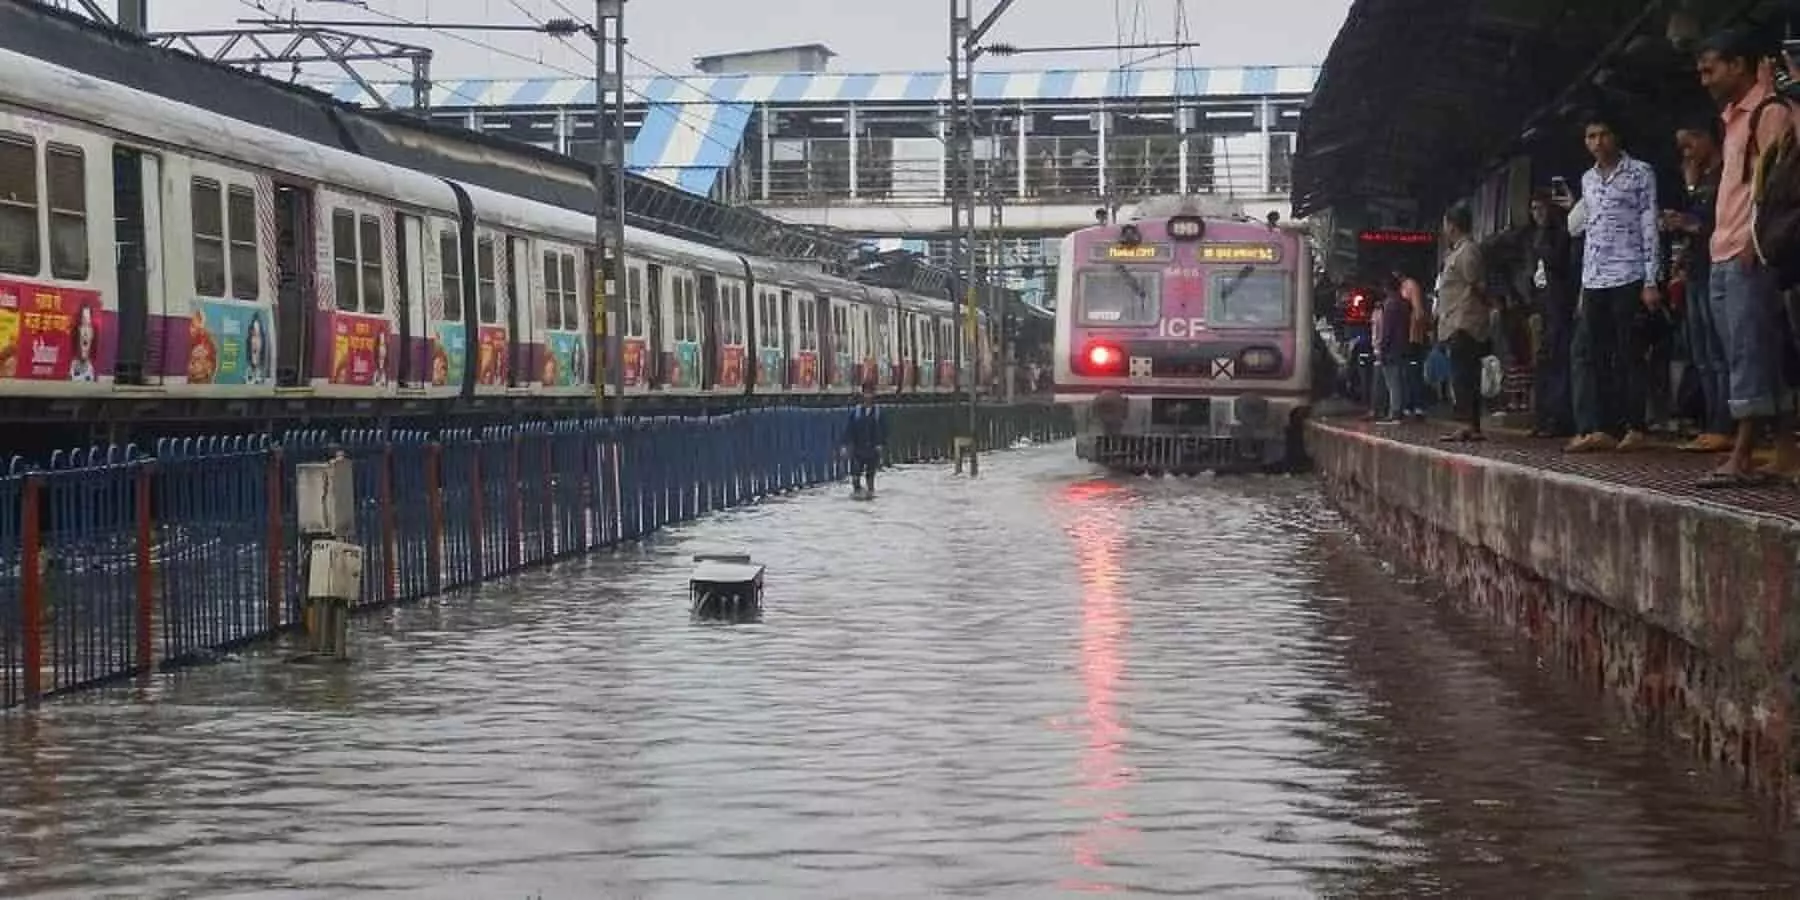 Mumbai Local Train News